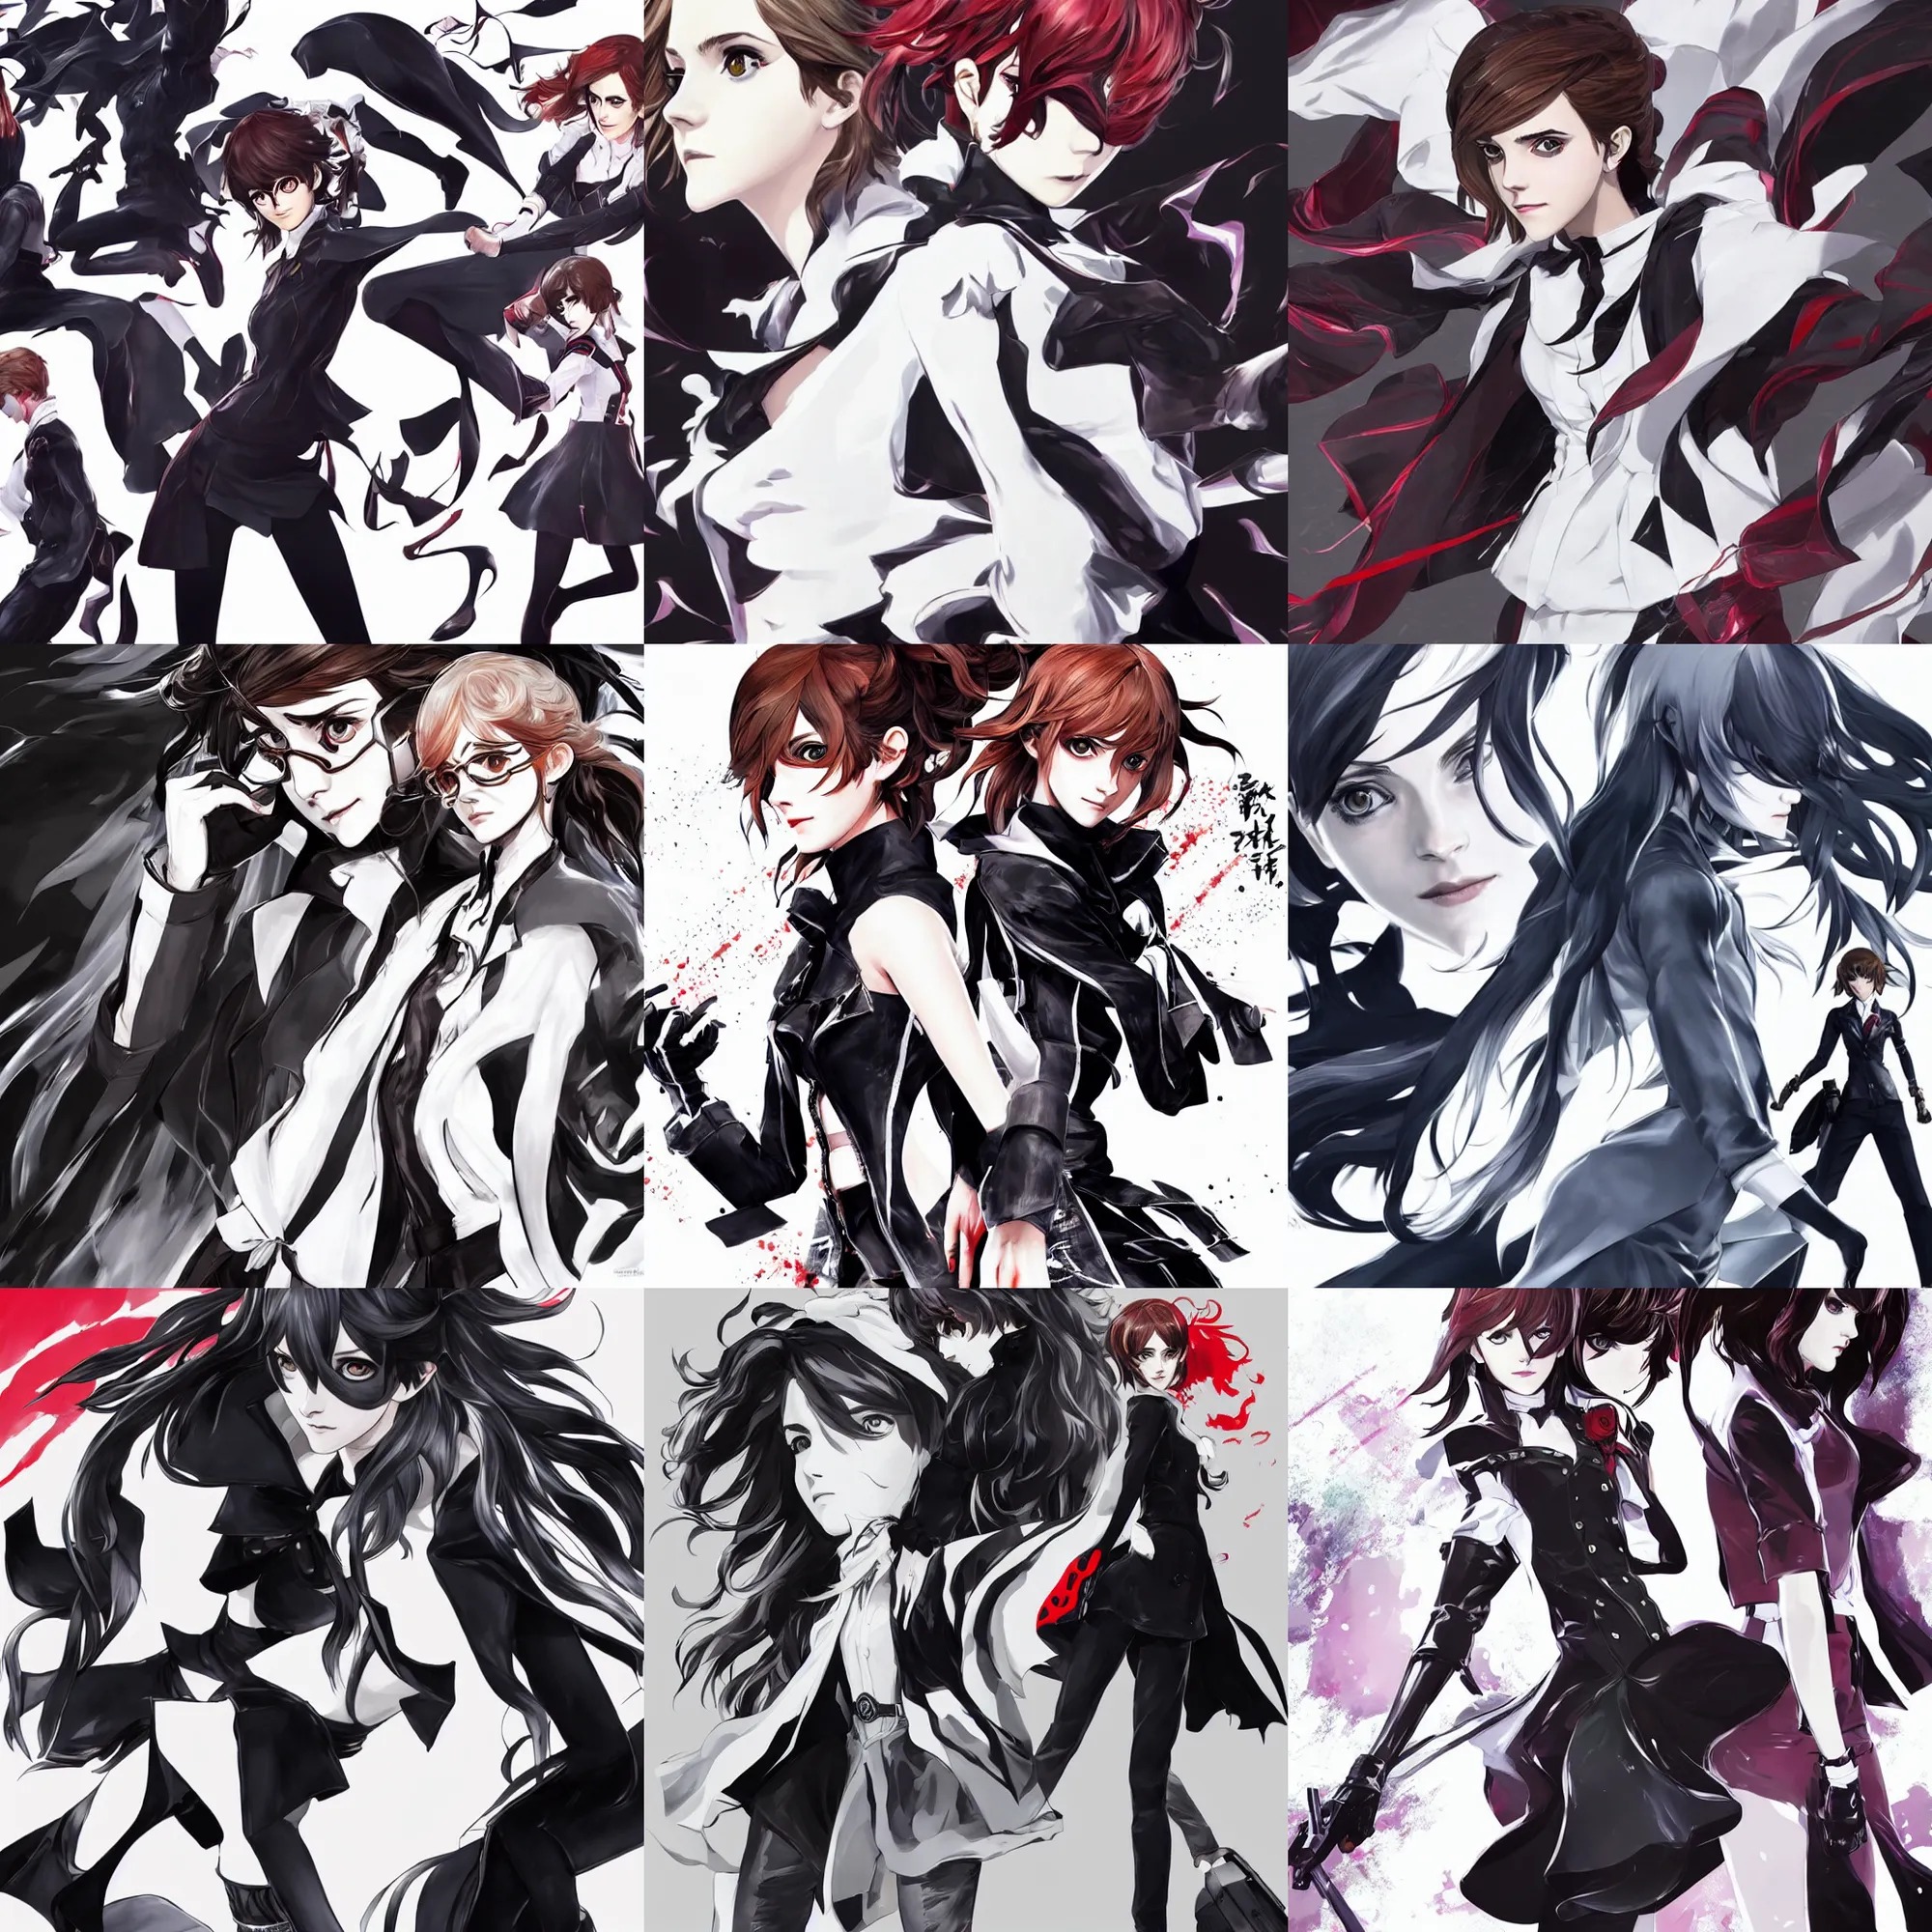 Image similar to concept art of emma watson as a persona 5 character, white background, 4k character illustration by shigenori soejima and masayoshi suto